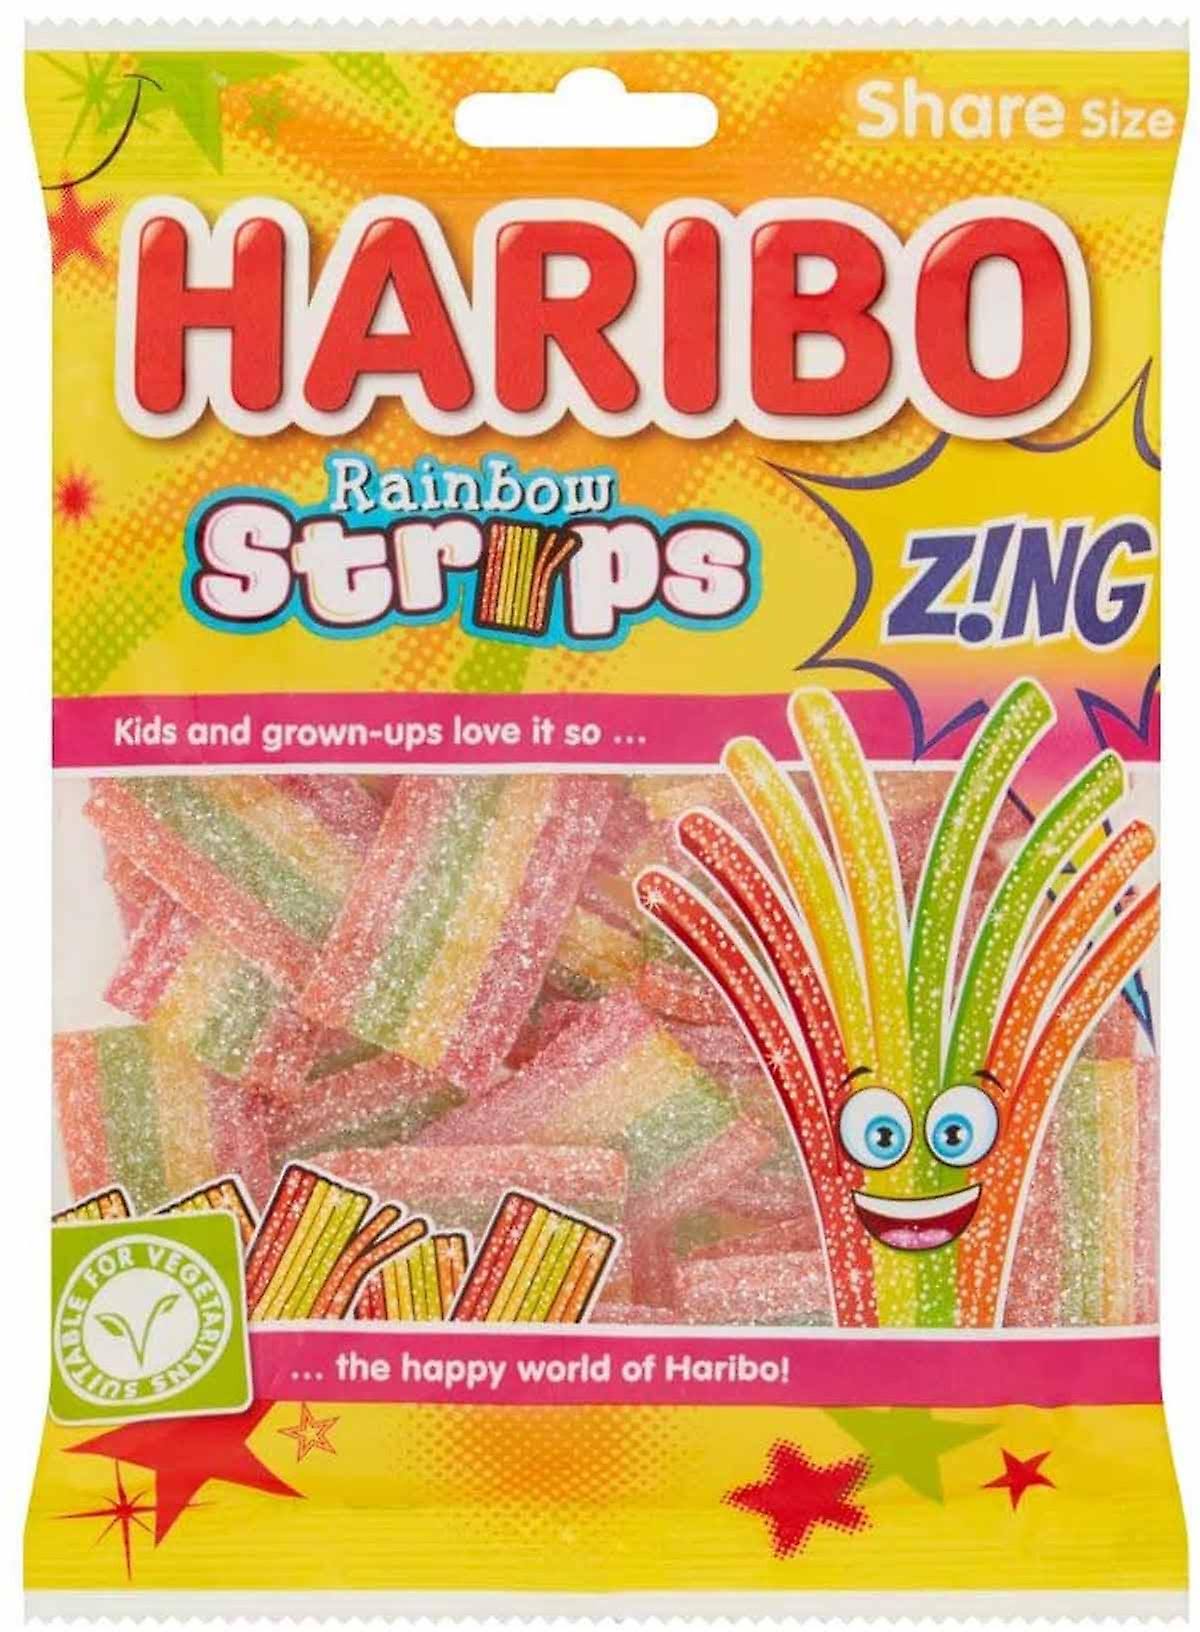 Haribo Rainbow Strips Zing Share Bag, 130g Bag